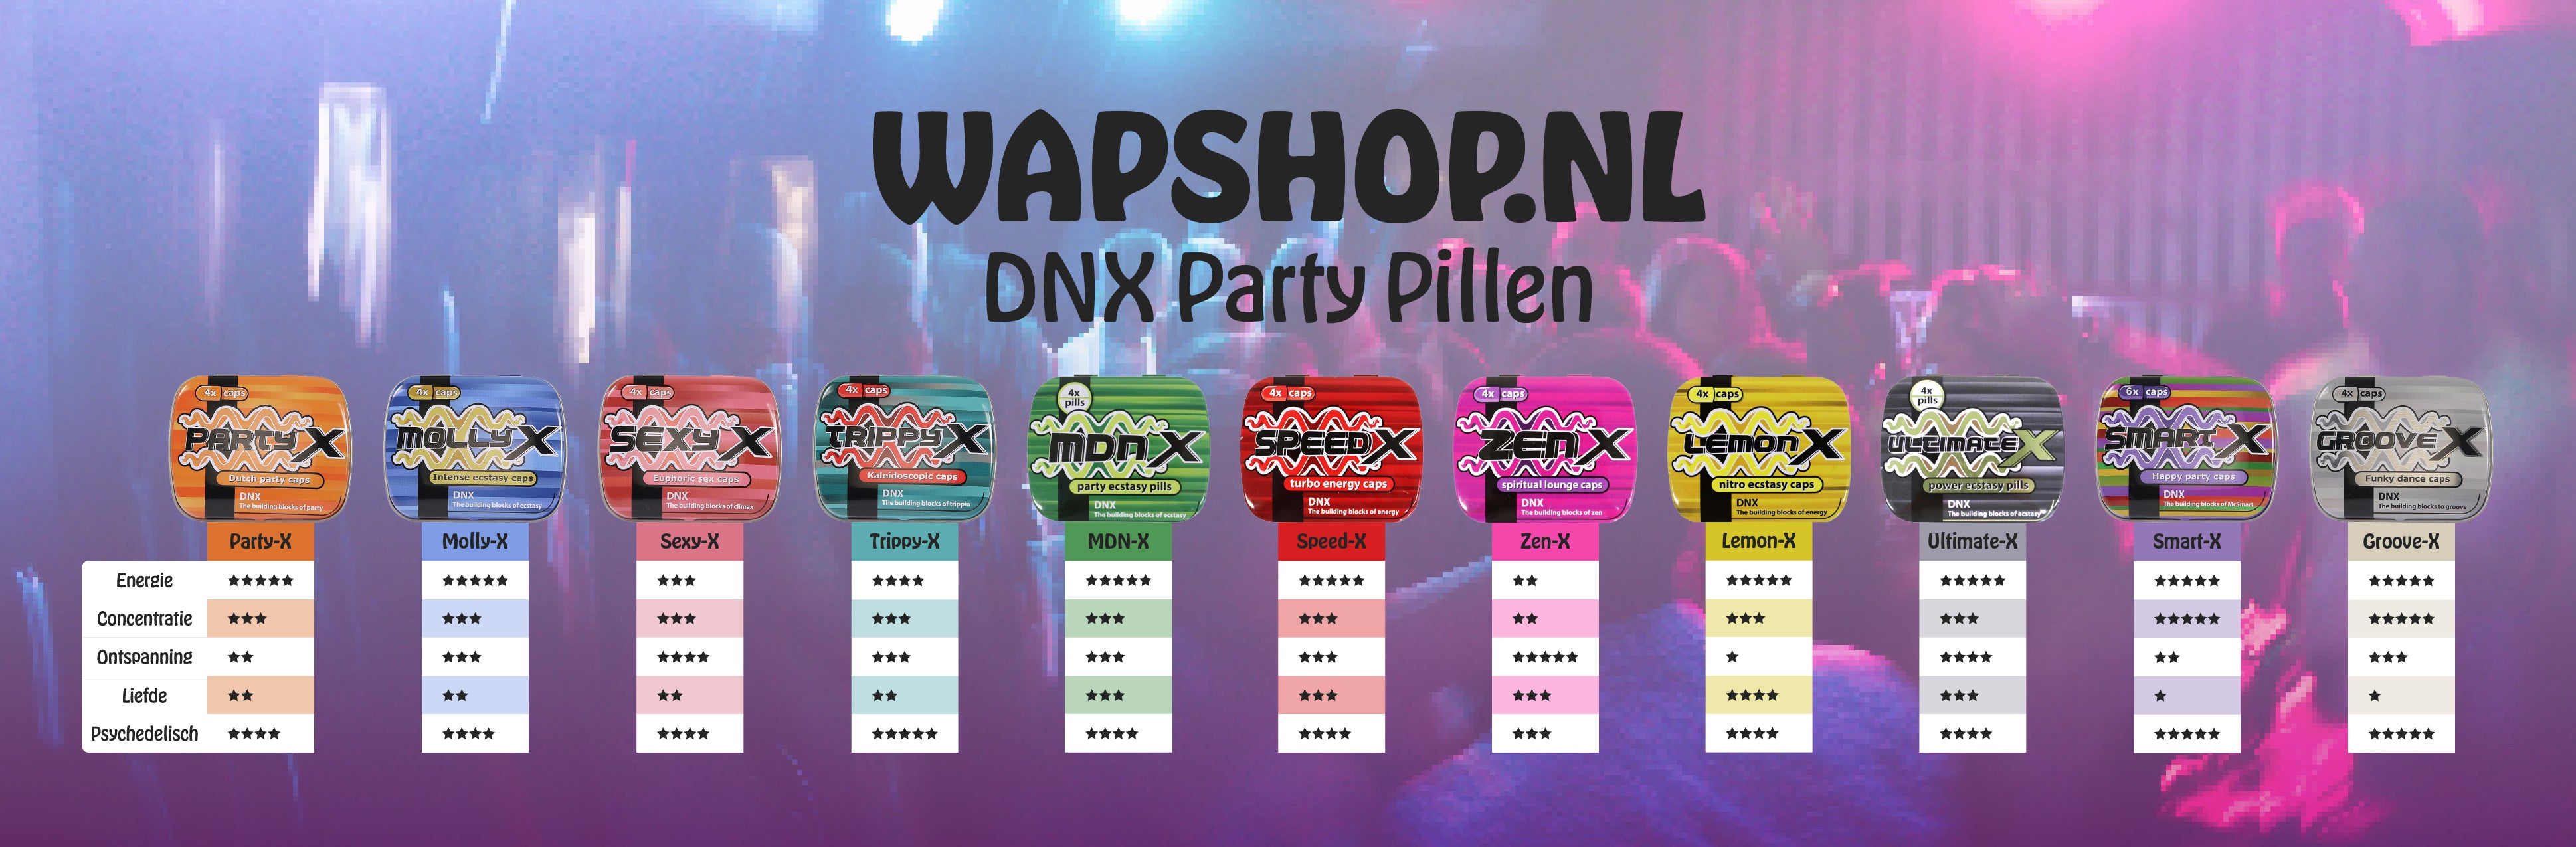 Wapshop DNX Party Pillen infographic